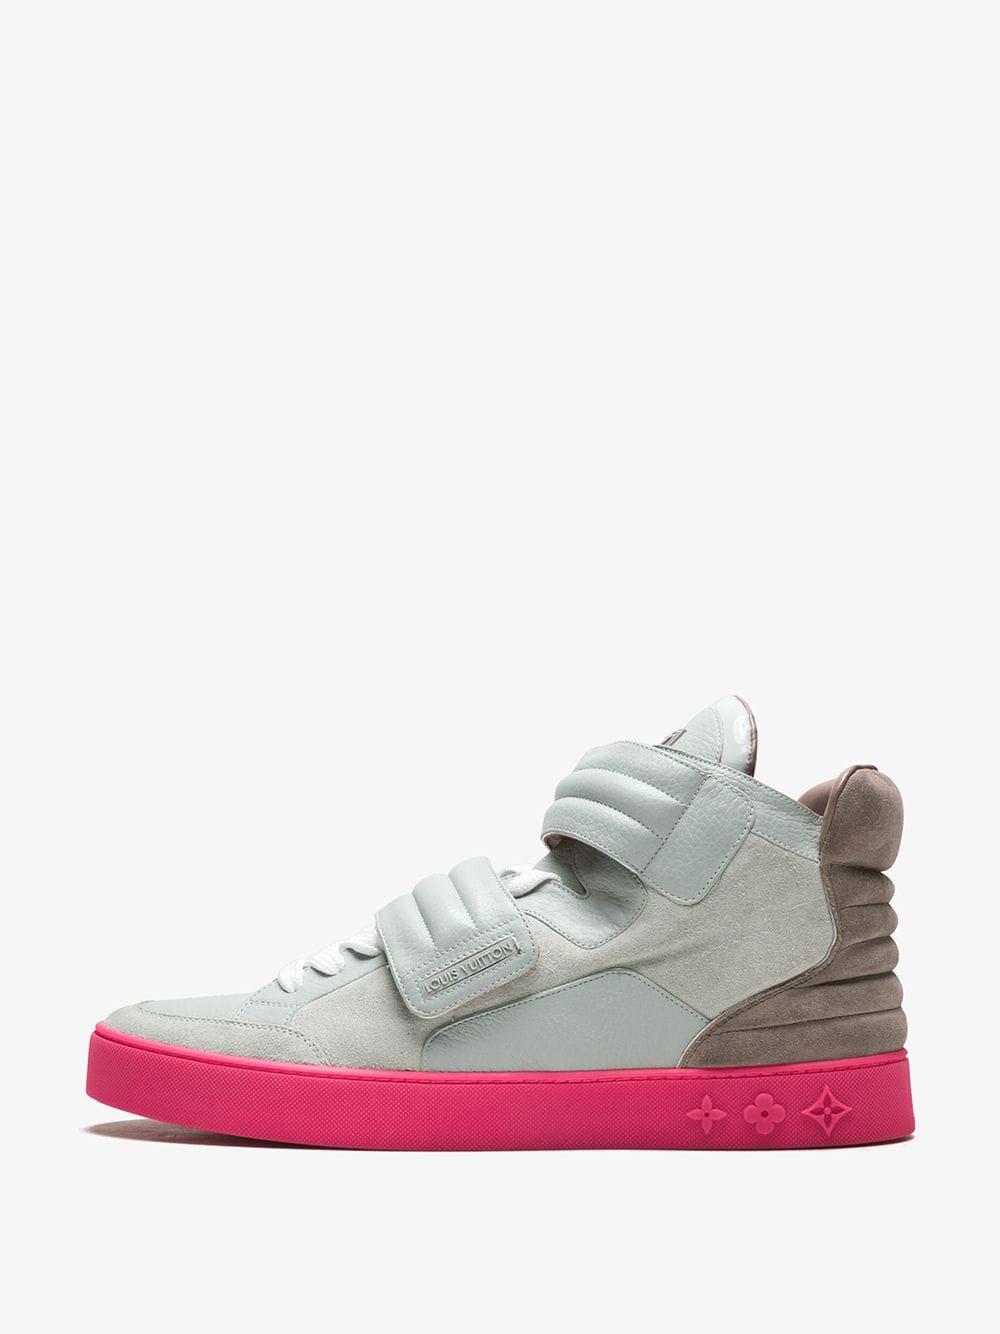 Stadium Goods Louis Vuitton X Kanye West Grey Jasper Sneakers in Gray for Men - Save 5% - Lyst